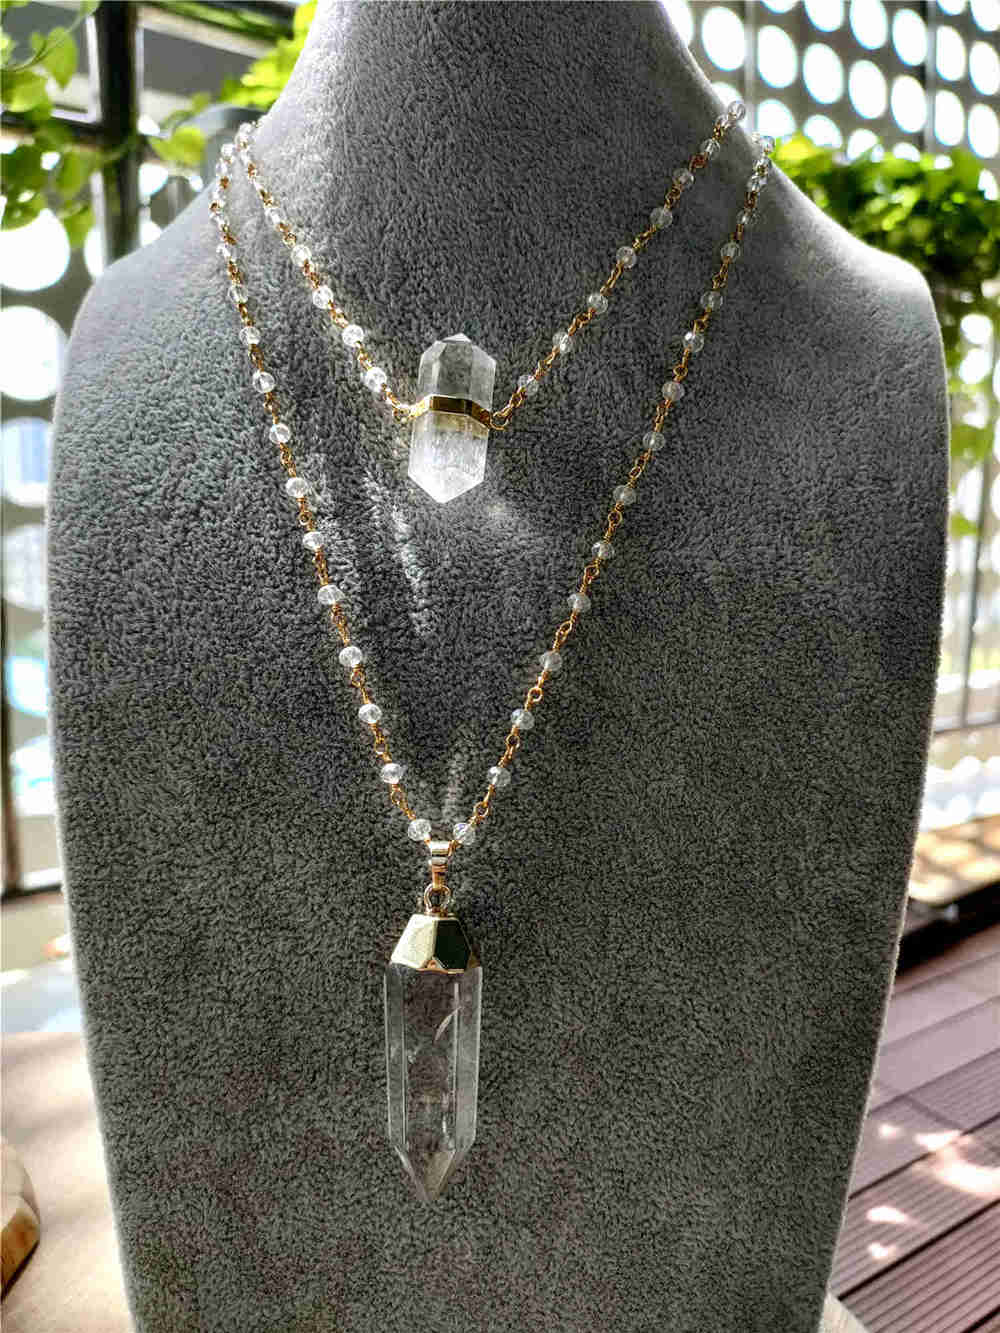 Natural White Quartz Pendant Bead Chain Necklace